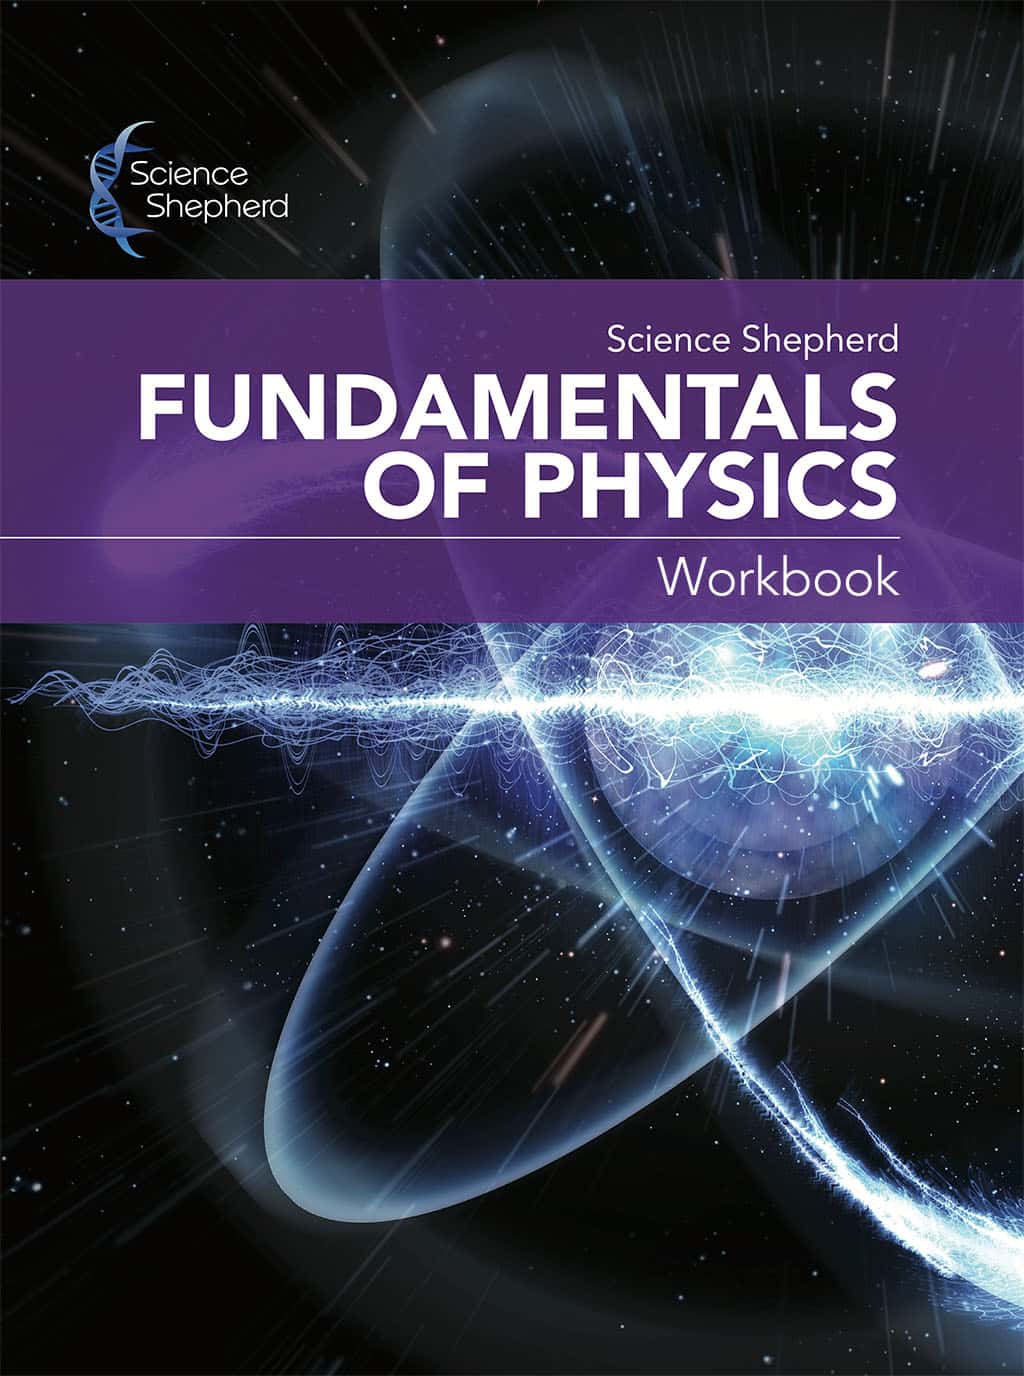 Homeschool physics workbook cover of a blue glowing atom